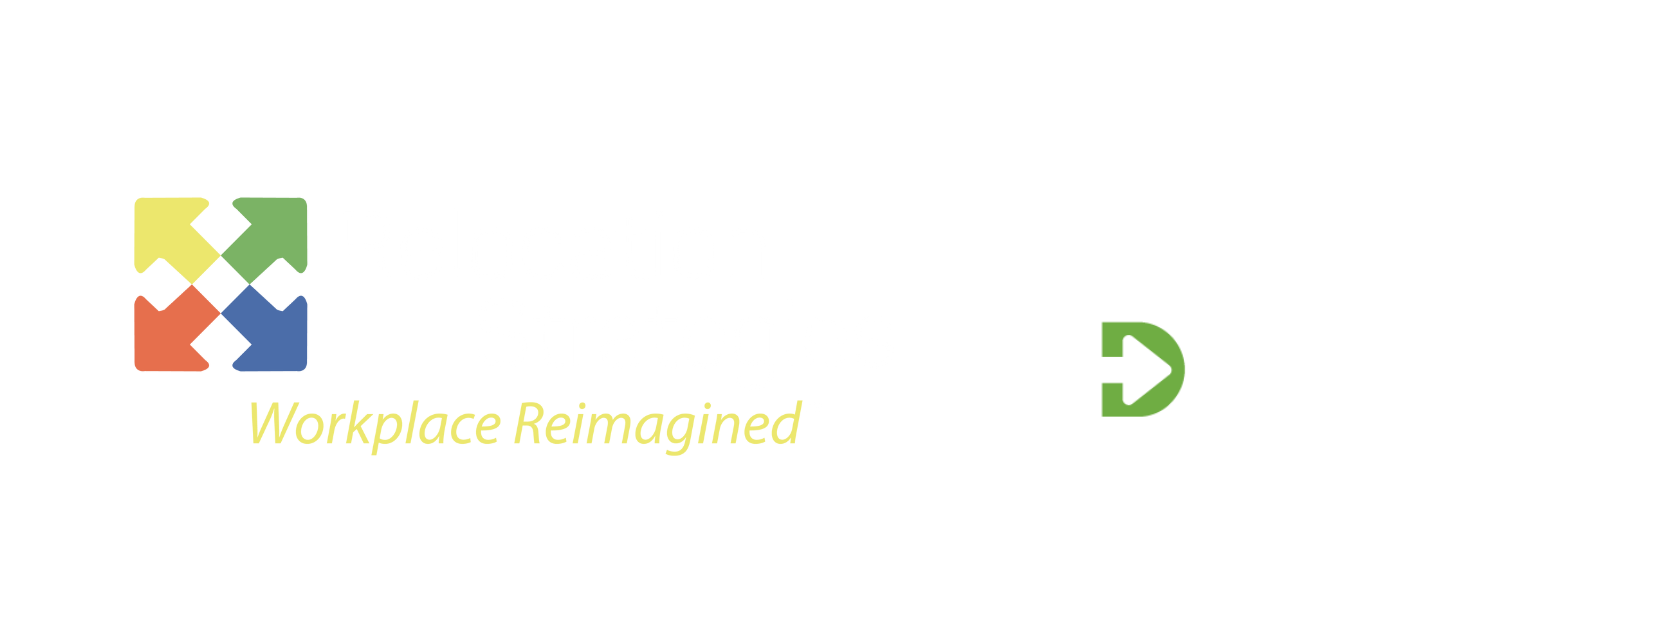 Relocation Strategies + Relo Design Combo Logo - White